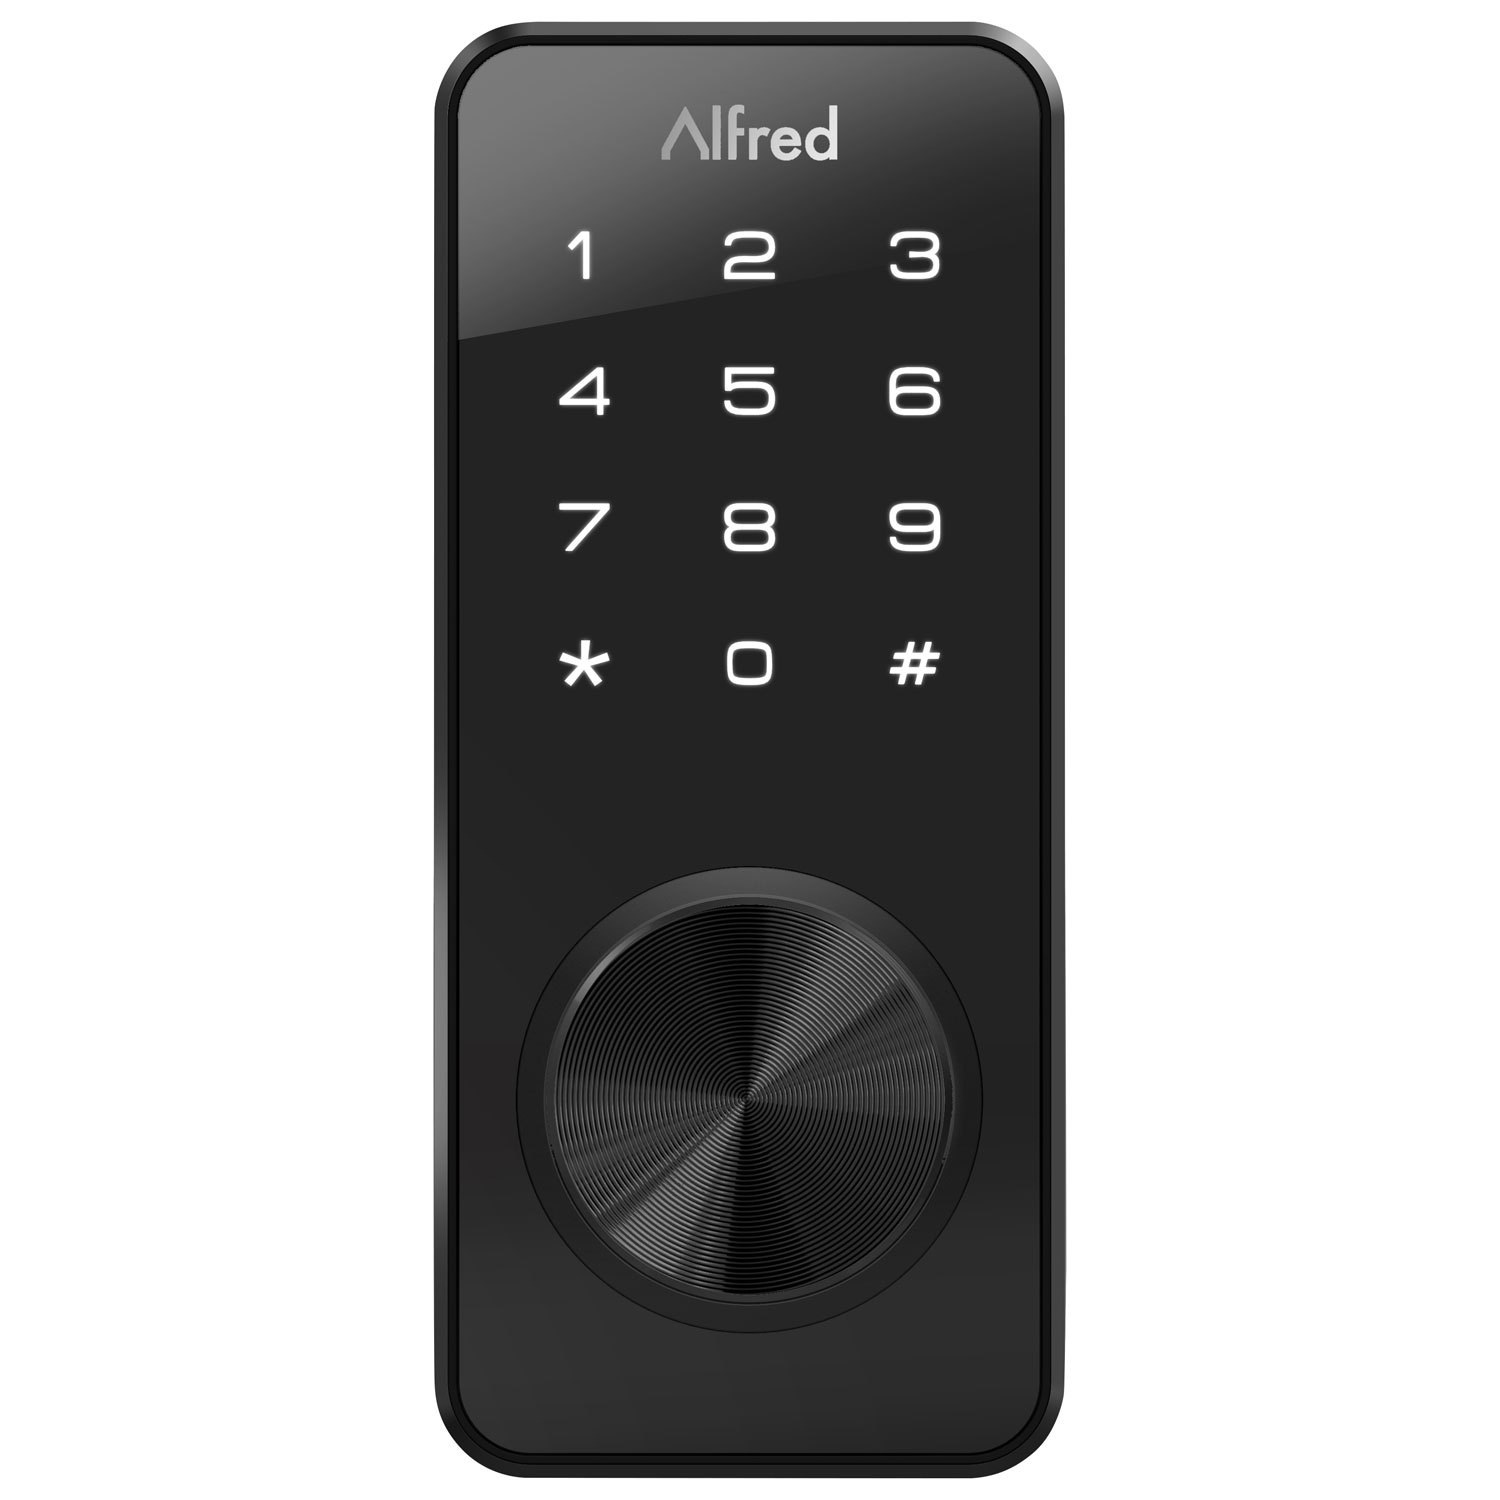 Alfred DB1S Bluetooth Smart Deadbolt Lock with Key - Black